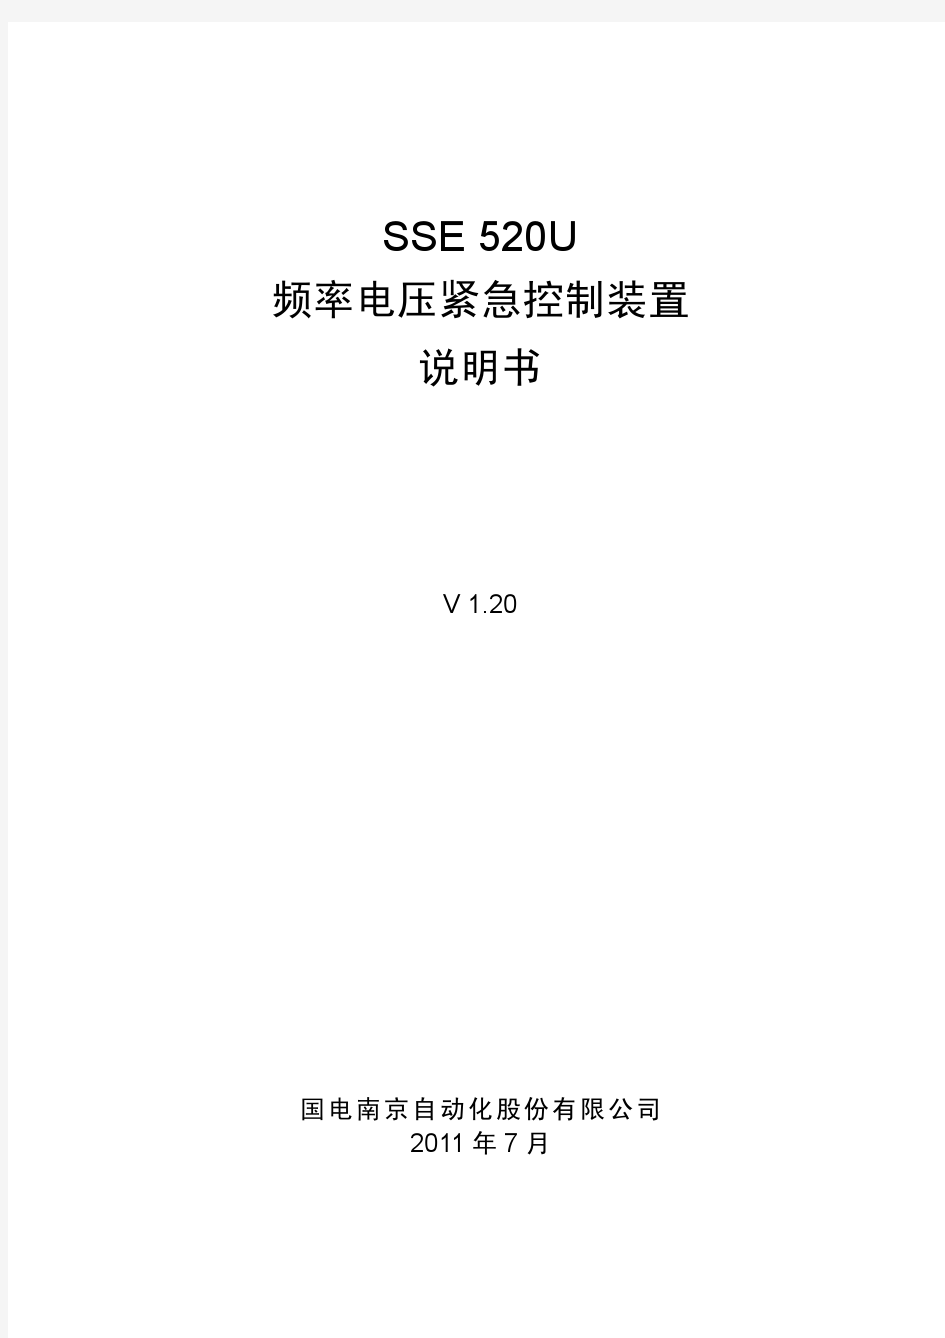 SSE 520U频率电压紧急控制装置说明书_V1.20_印刷